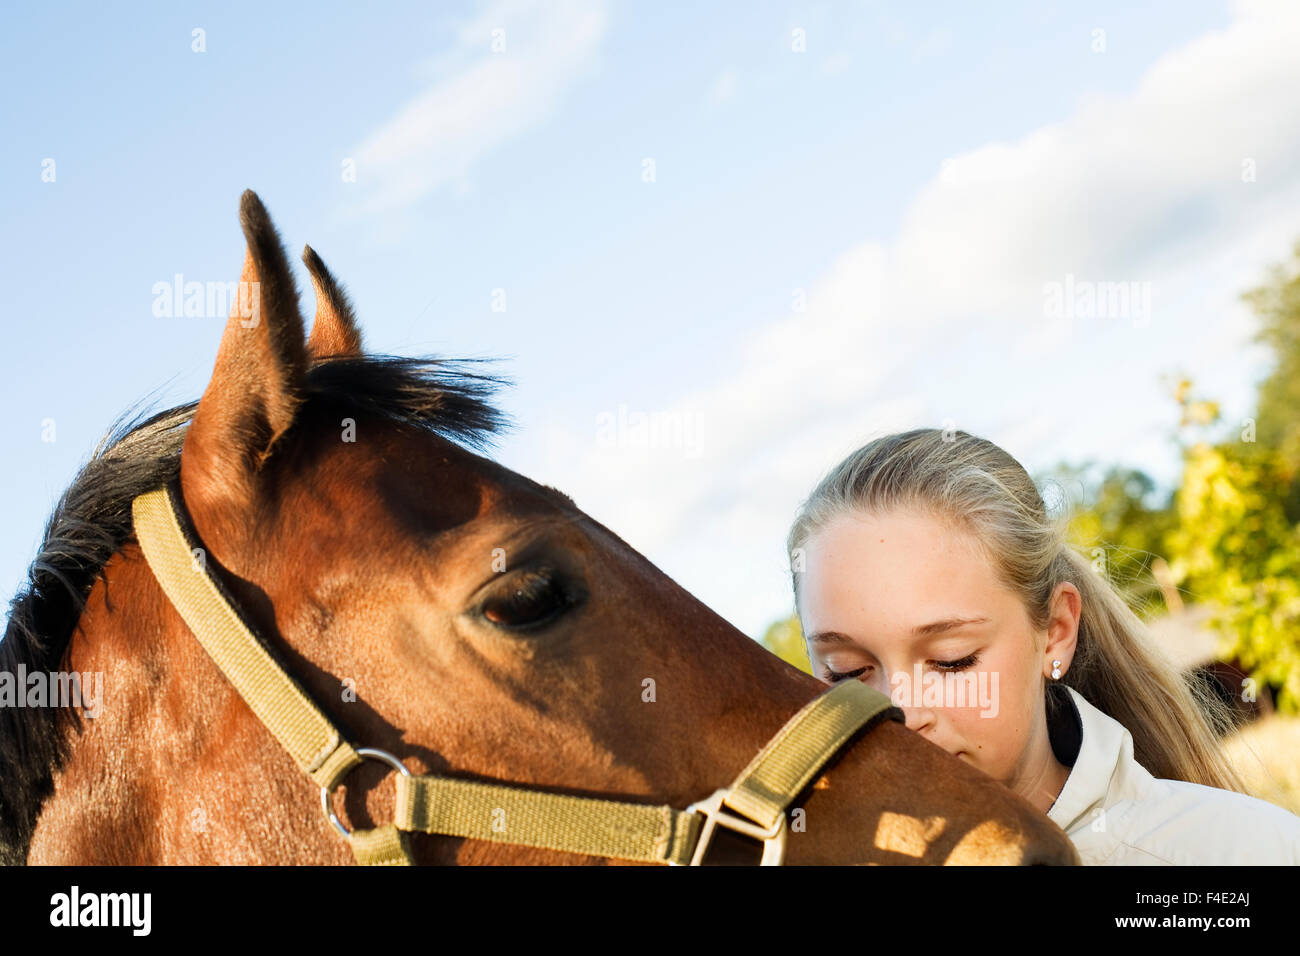 A teenagegirl and a horse, Sweden. Stock Photo